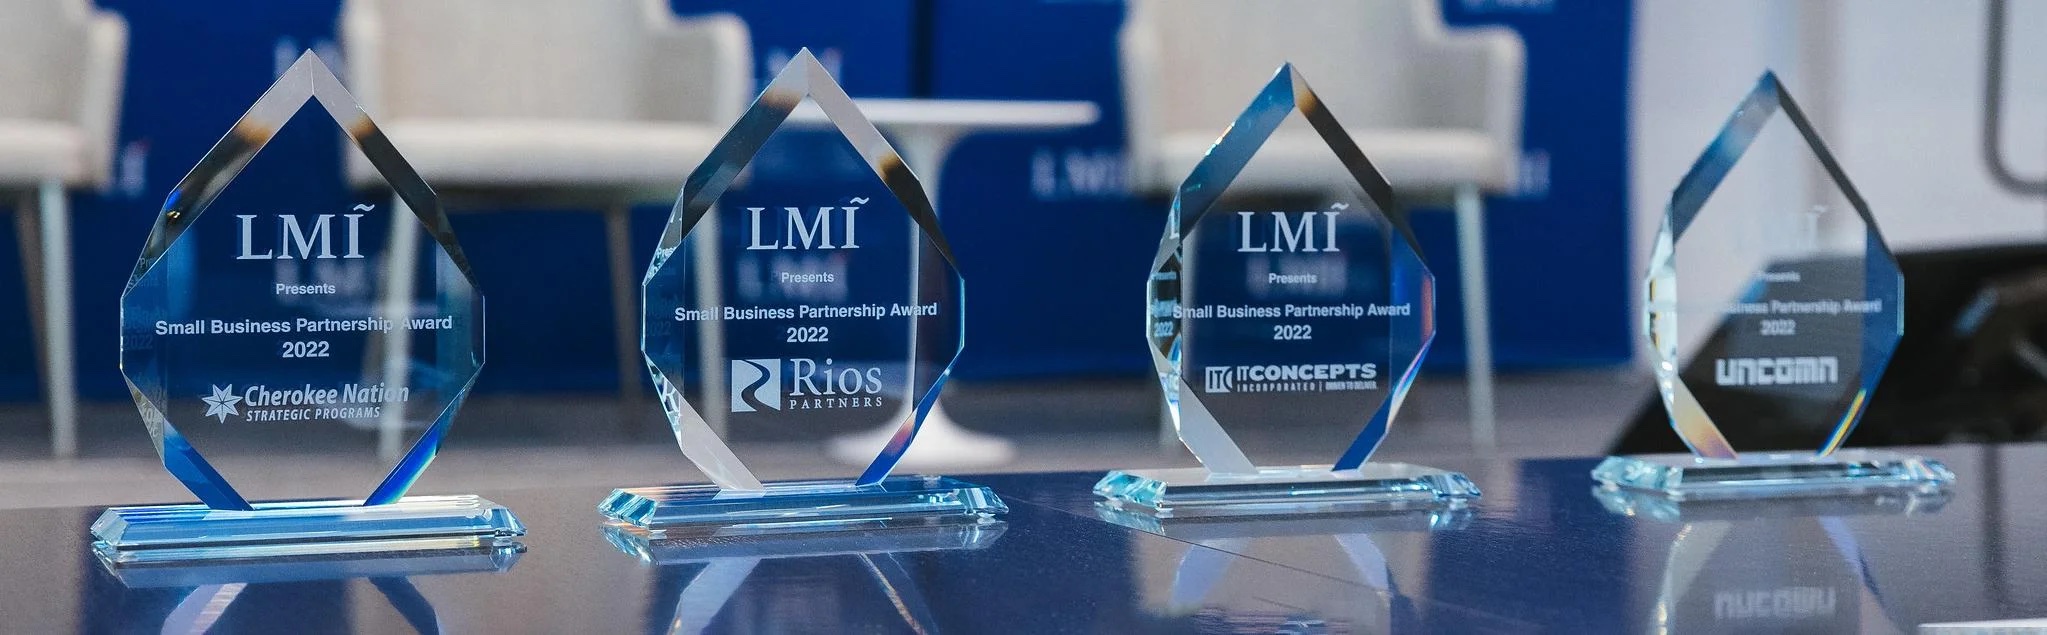 LMI awards